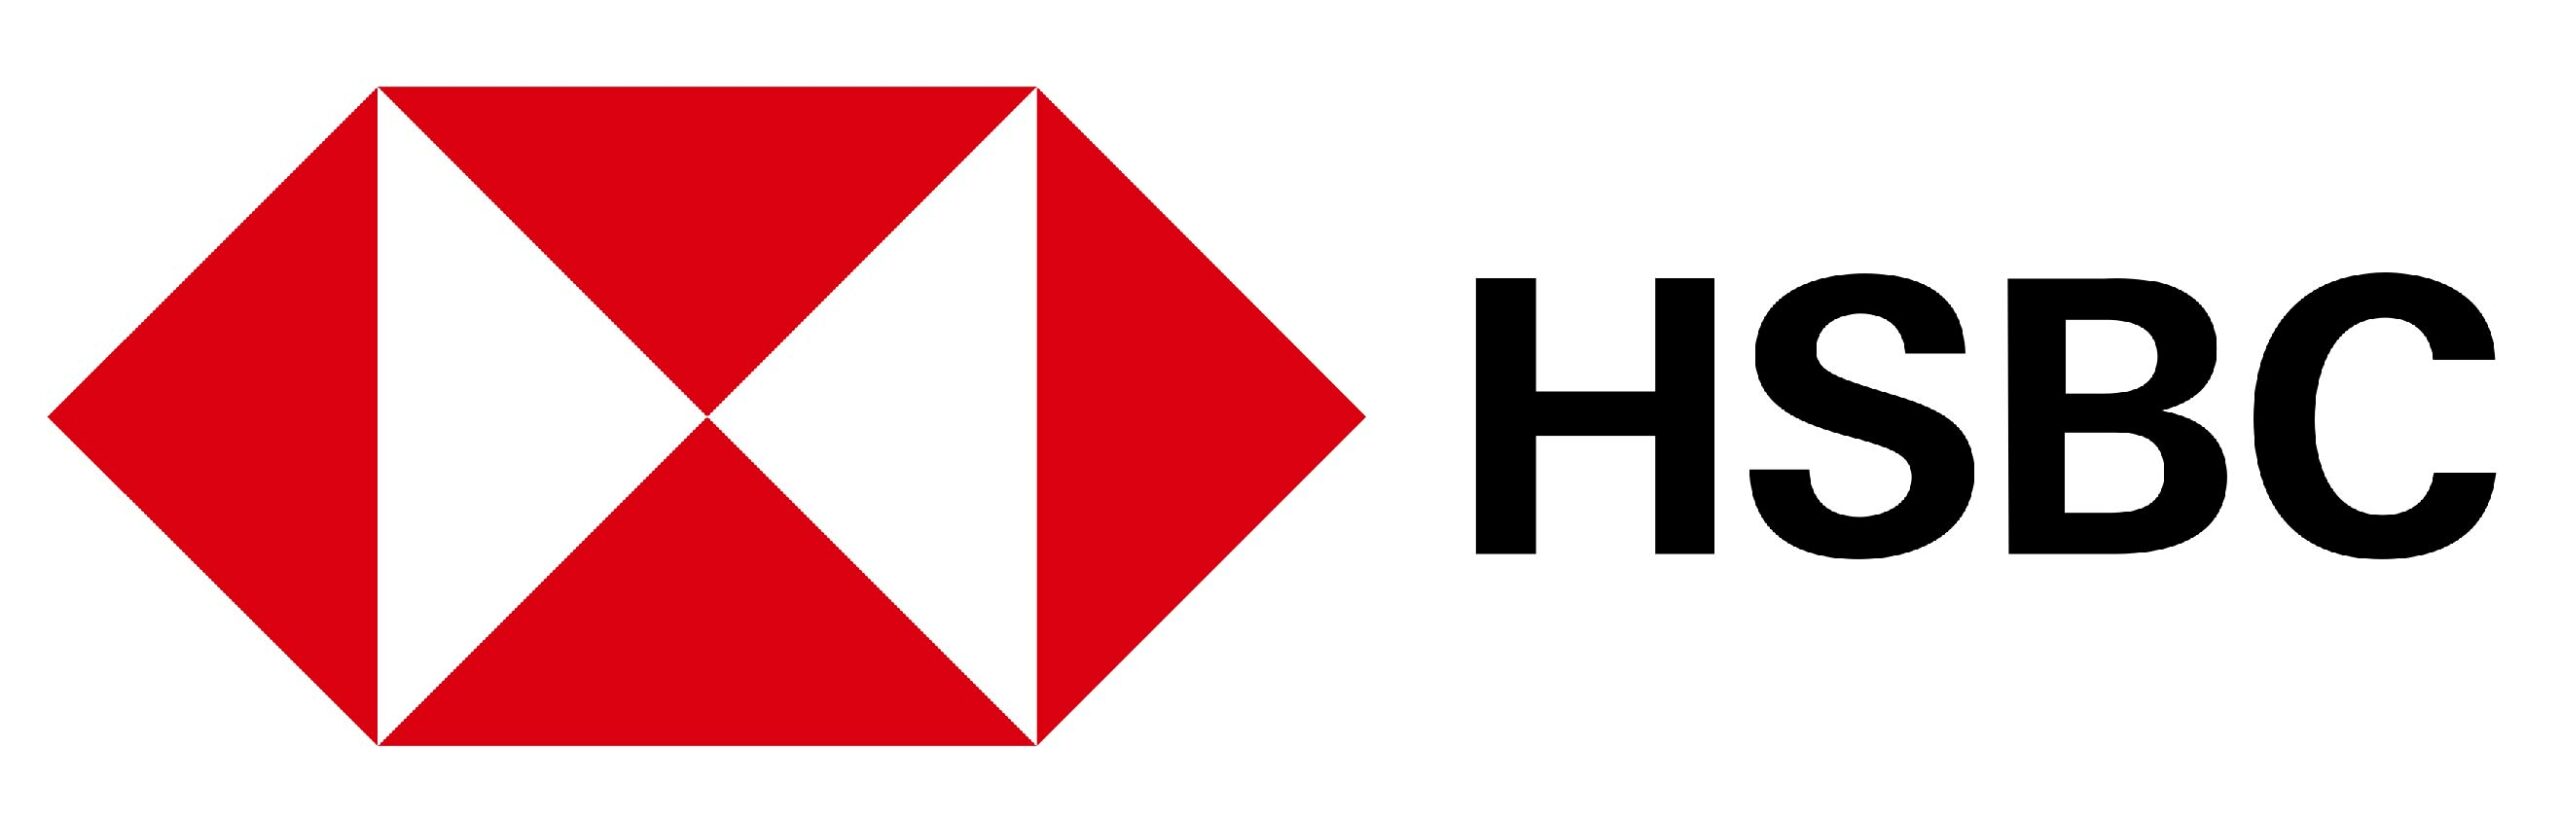 hsbc-logo-0-01